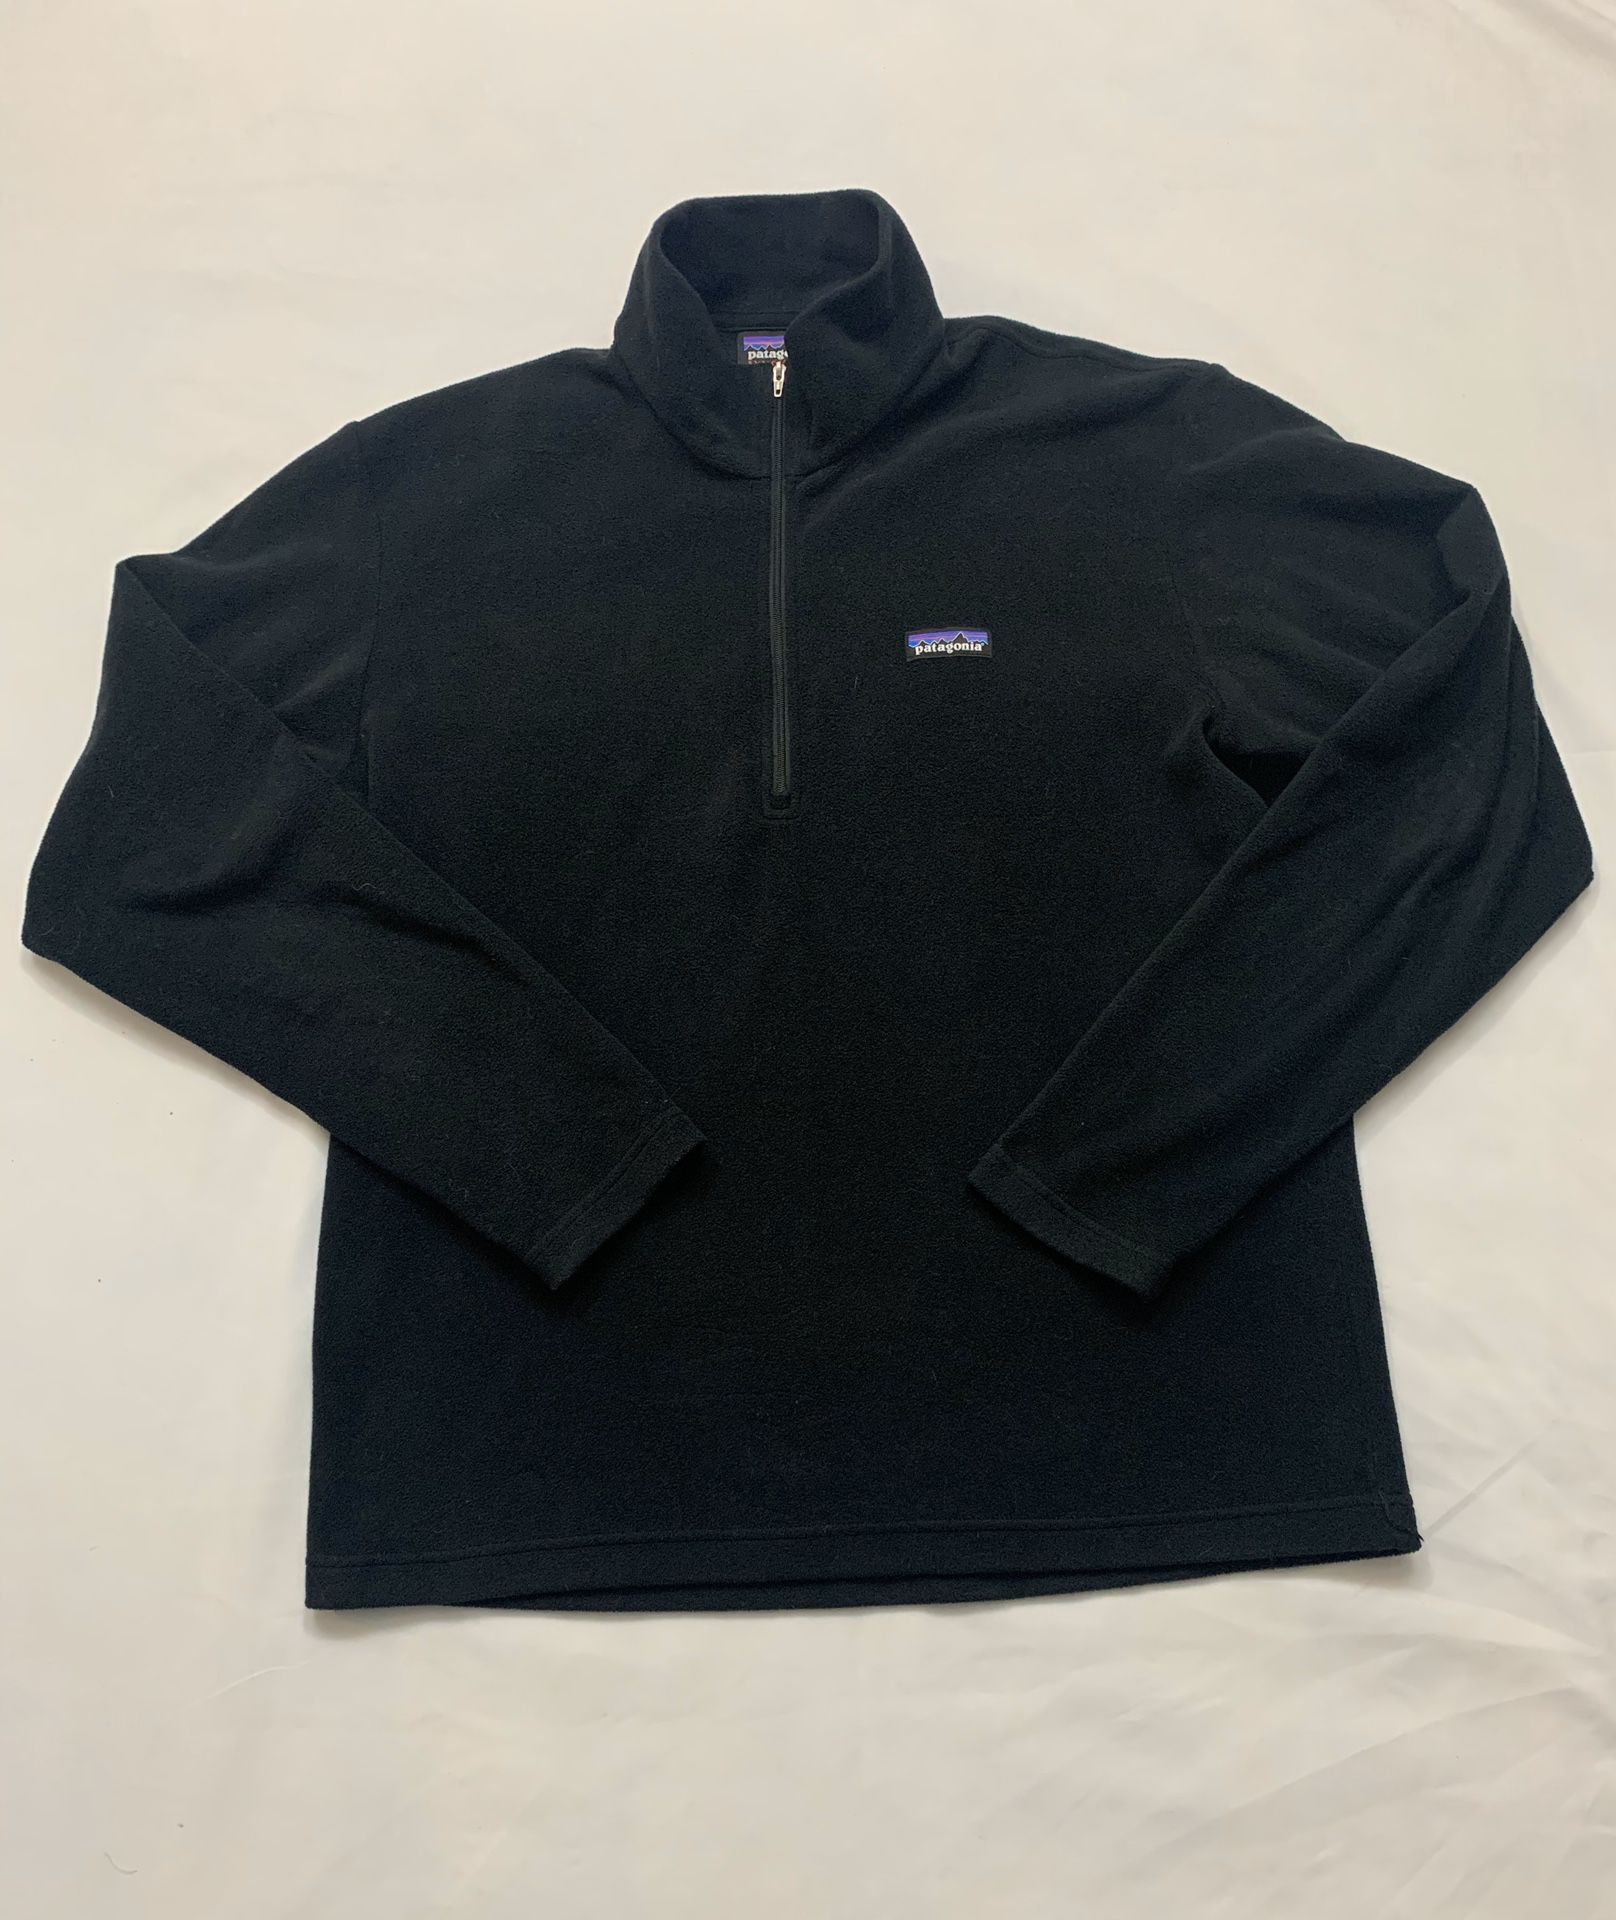 Vintage Retro 90’s Patagonia Synchilla Black Fleece Jacket Men’s Size Medium